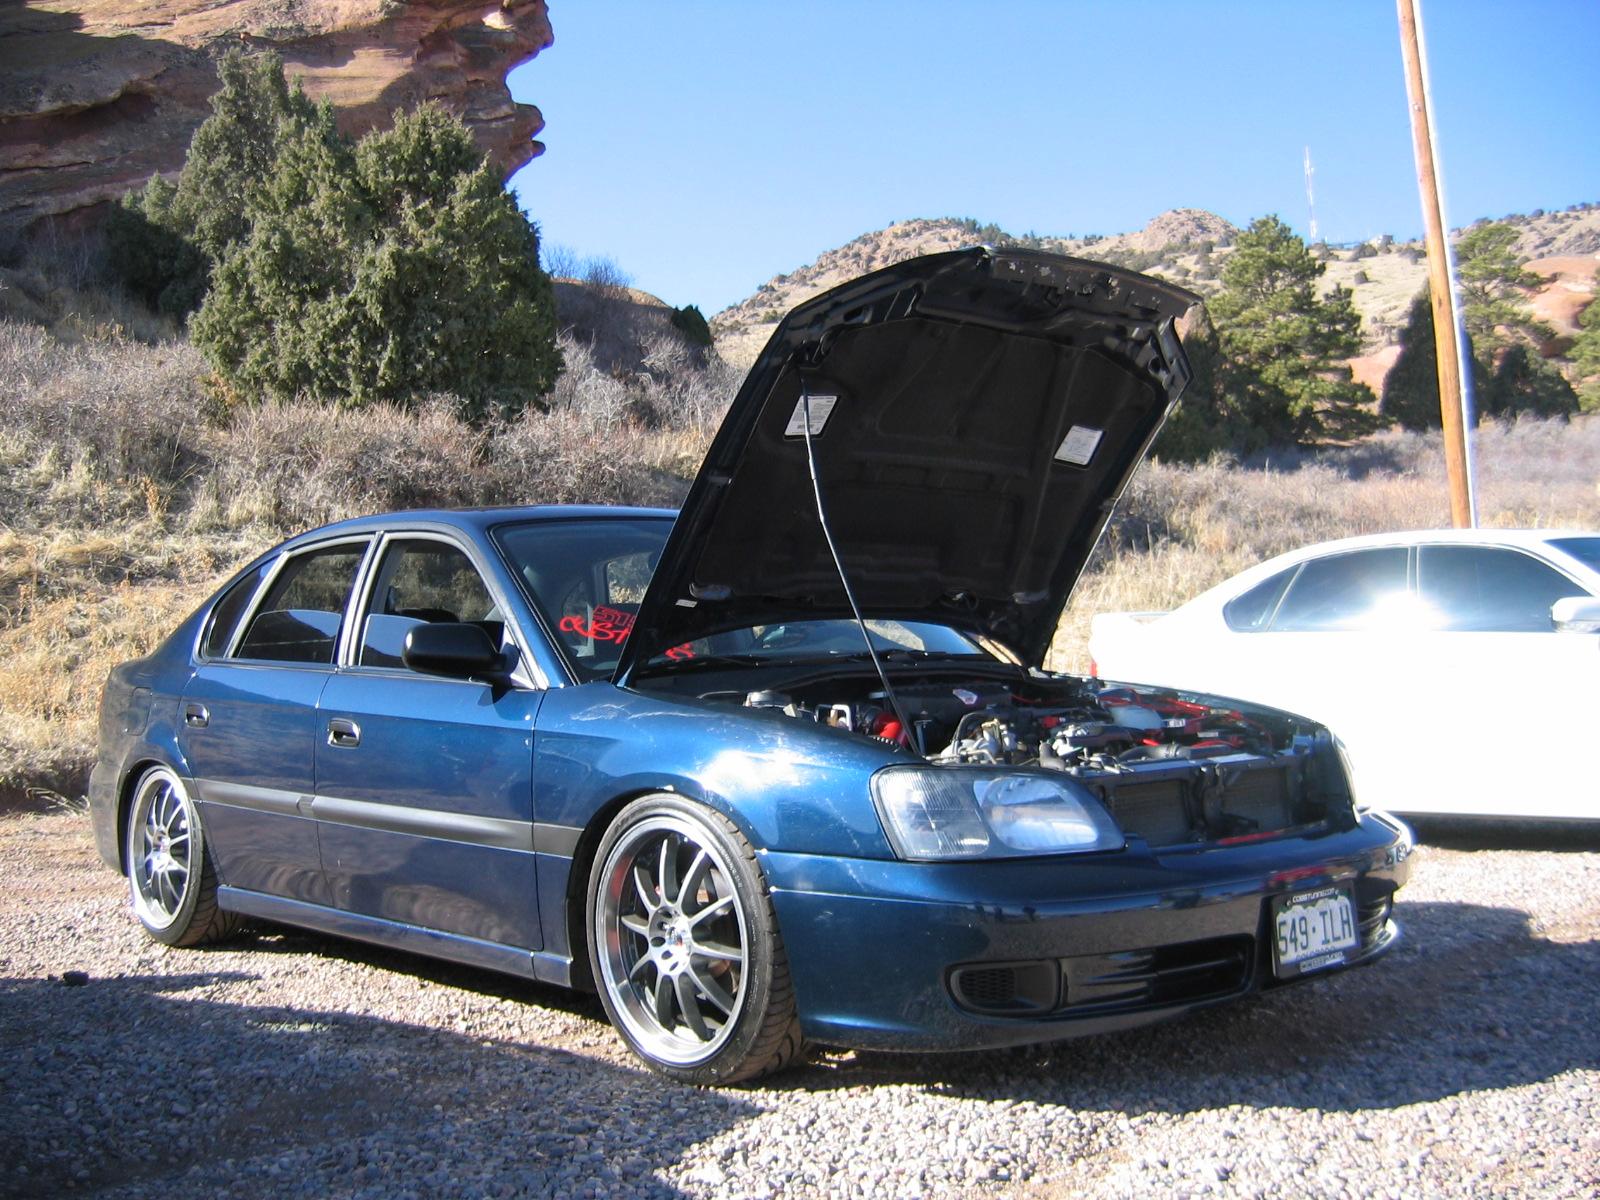  2002 Subaru Legacy L